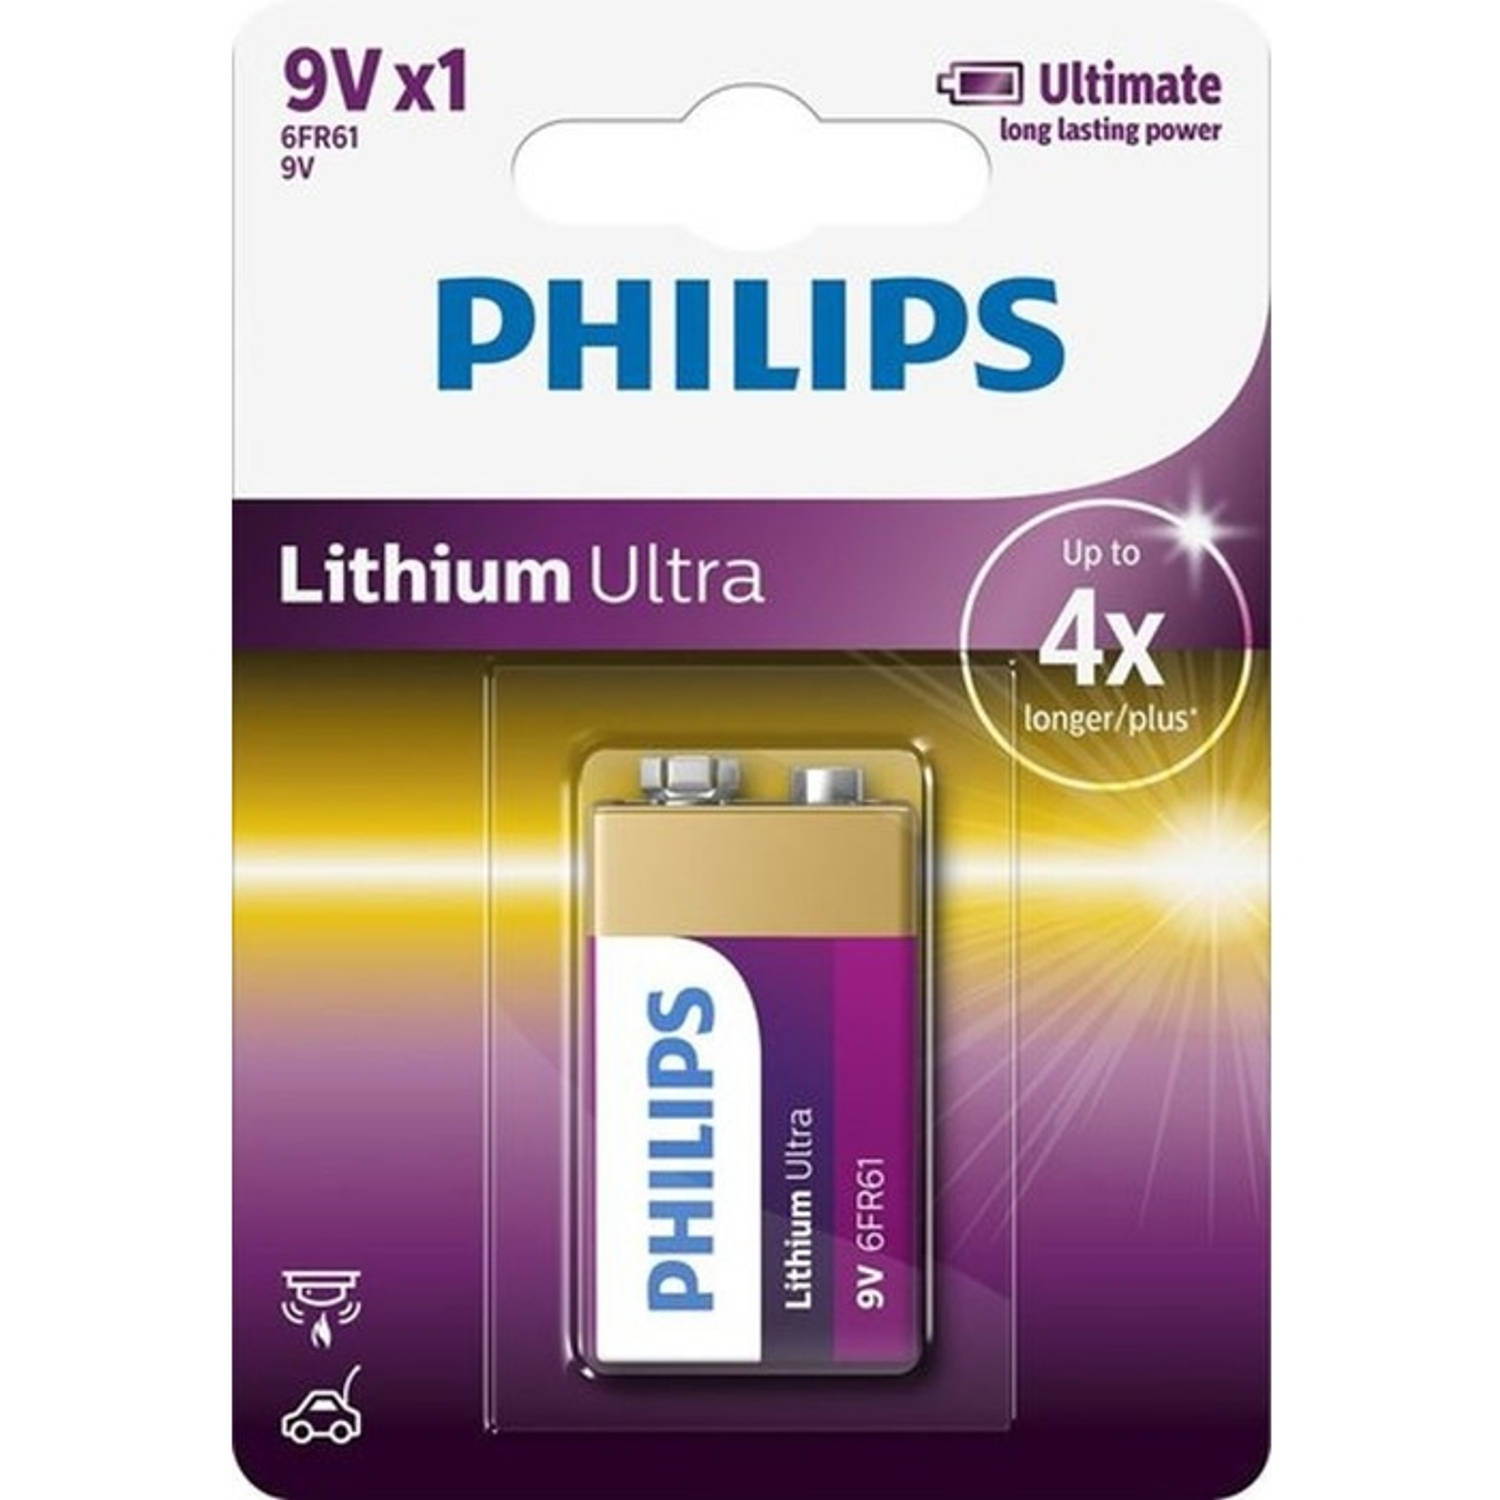 Philips Lithium Ultra battery 9V (6FR61LB1A-10)